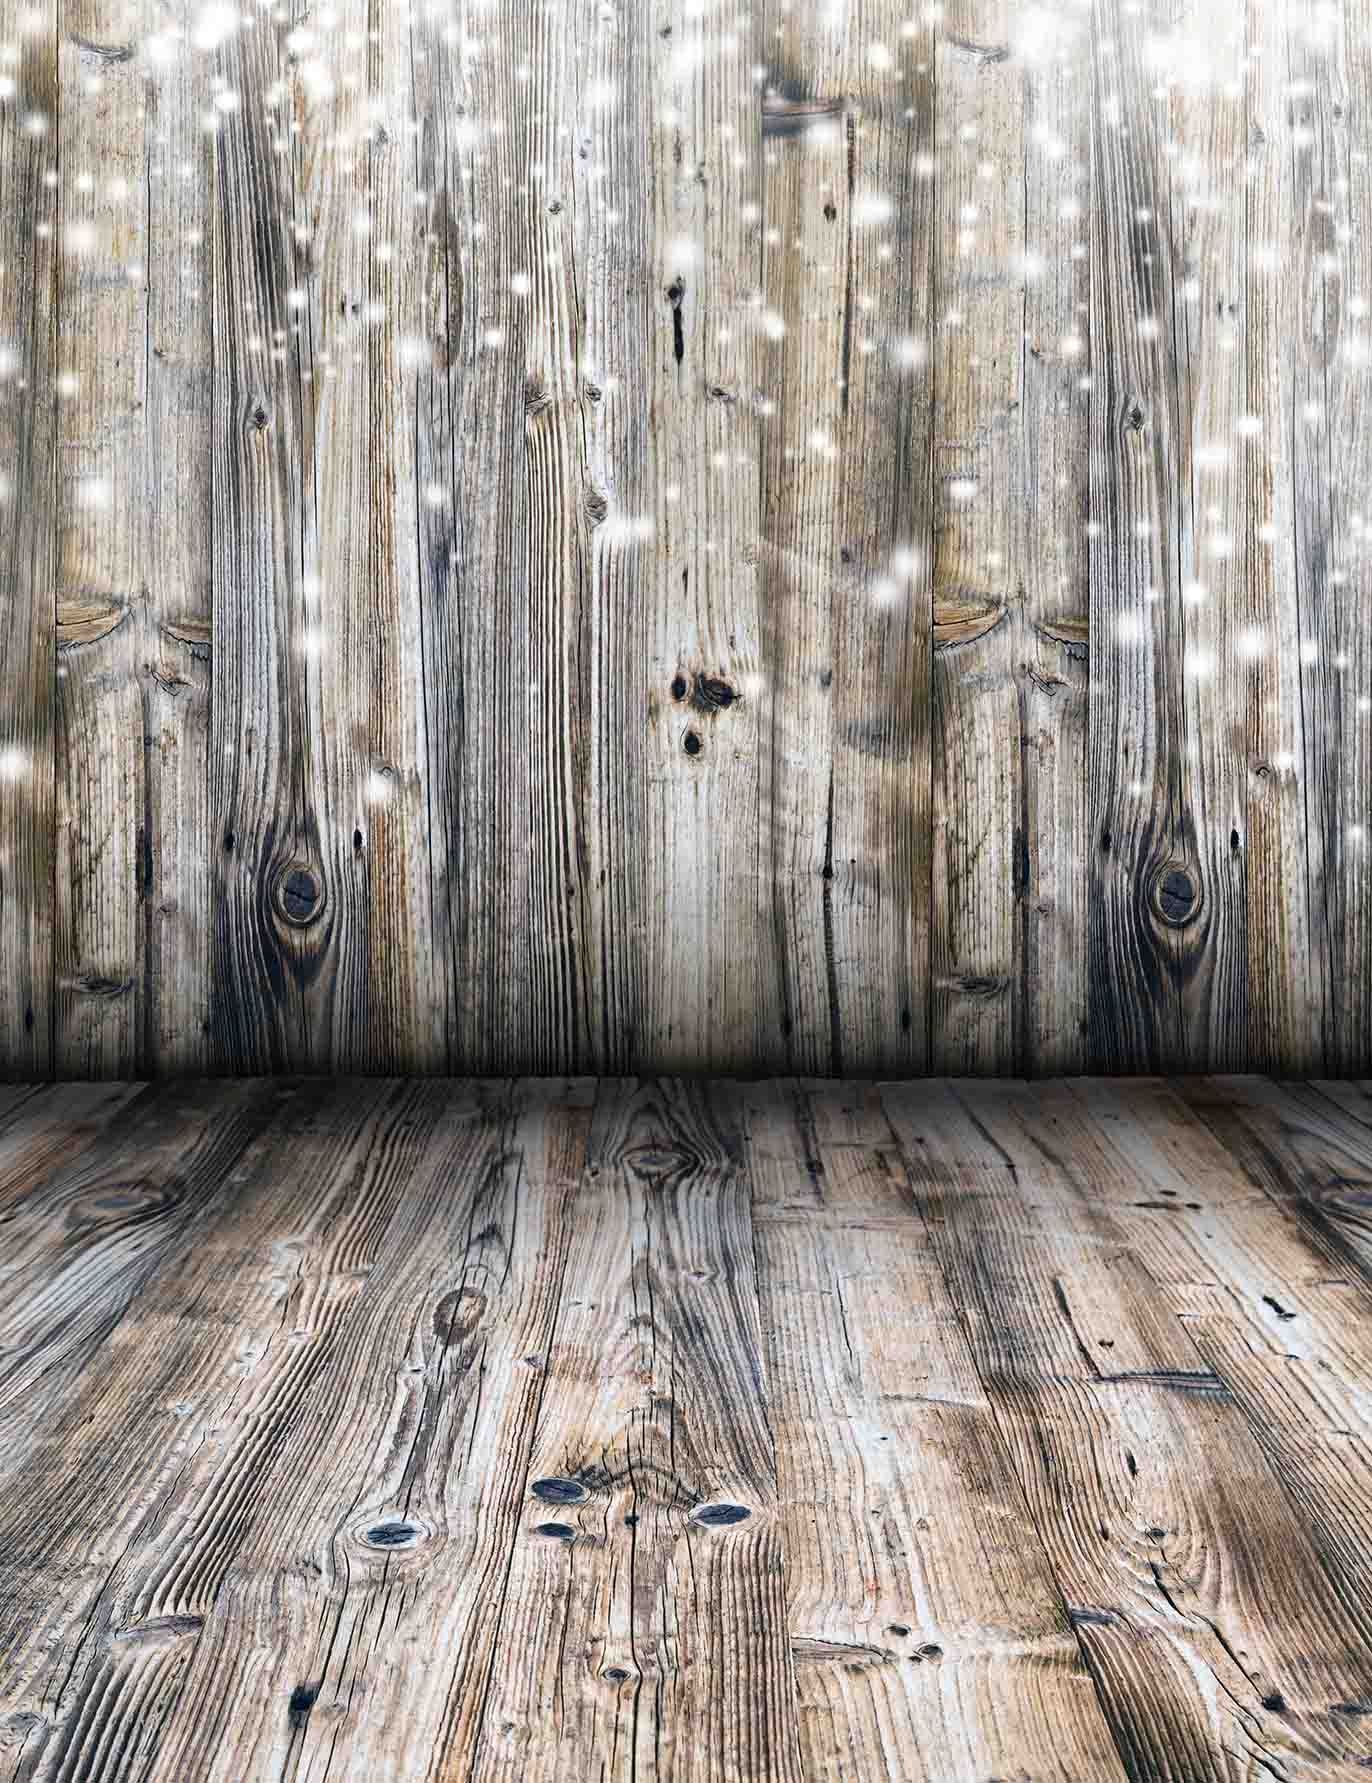 Retro Wood Wall With Snow Bokeh For Christmas Backdrop Shopbackdrop